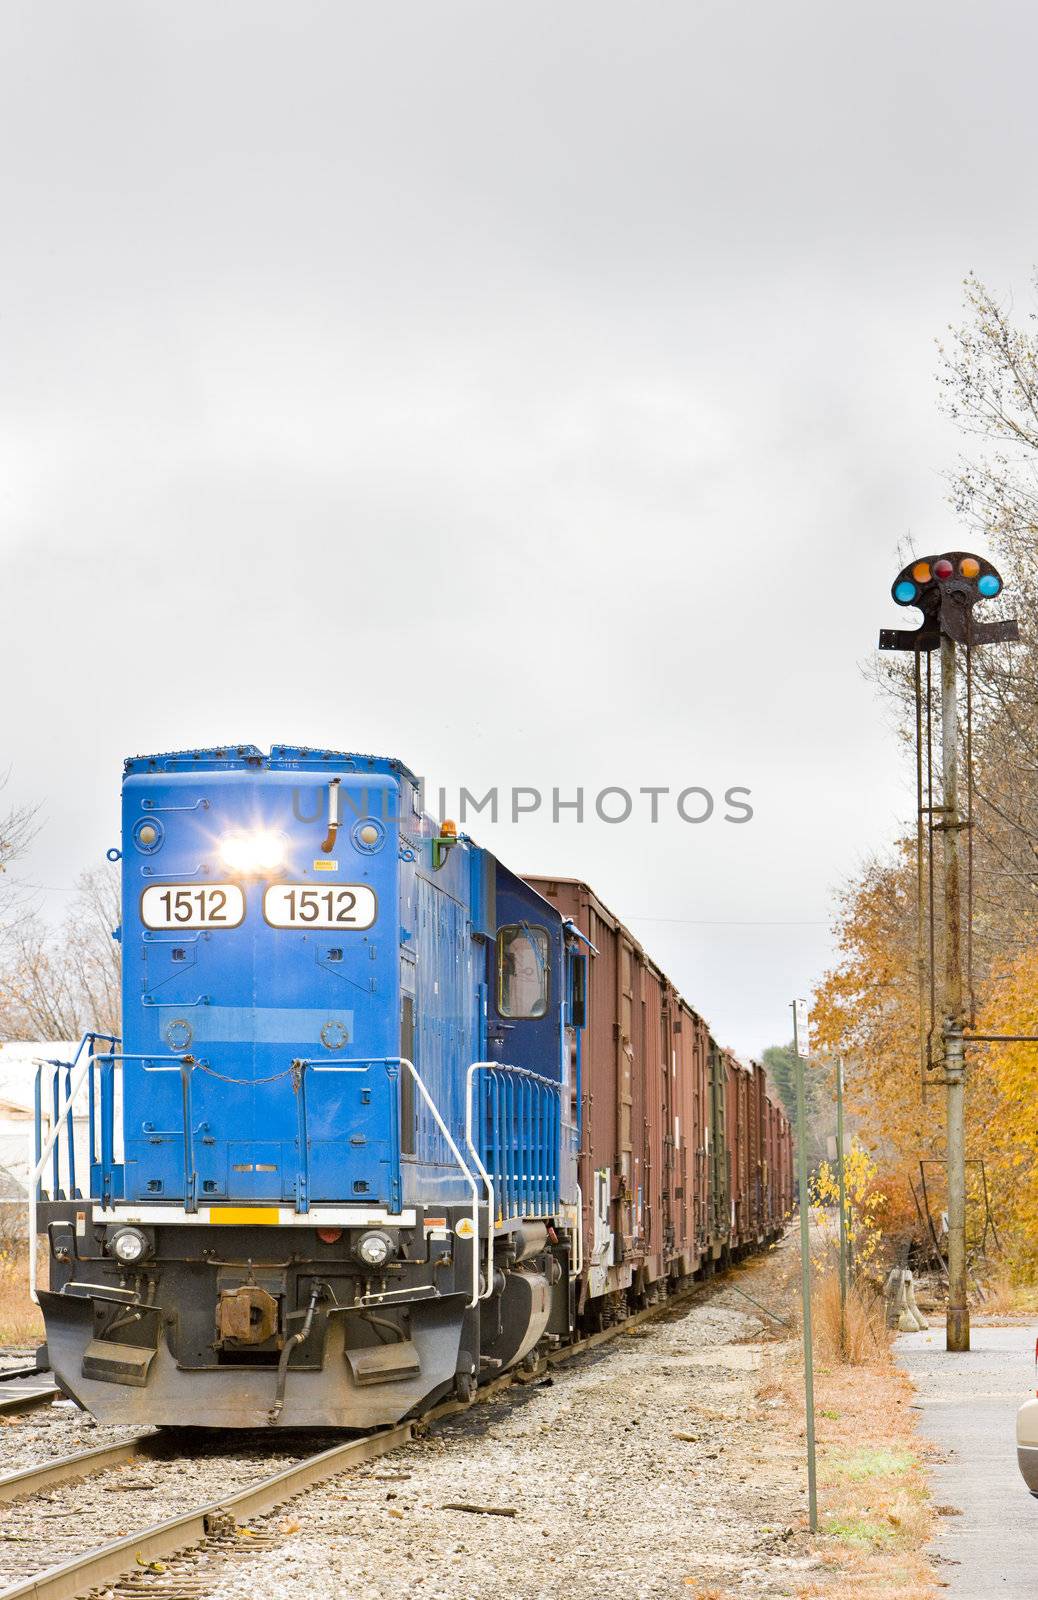 train with motor locomotive, South Paris, Maine, USA by phbcz